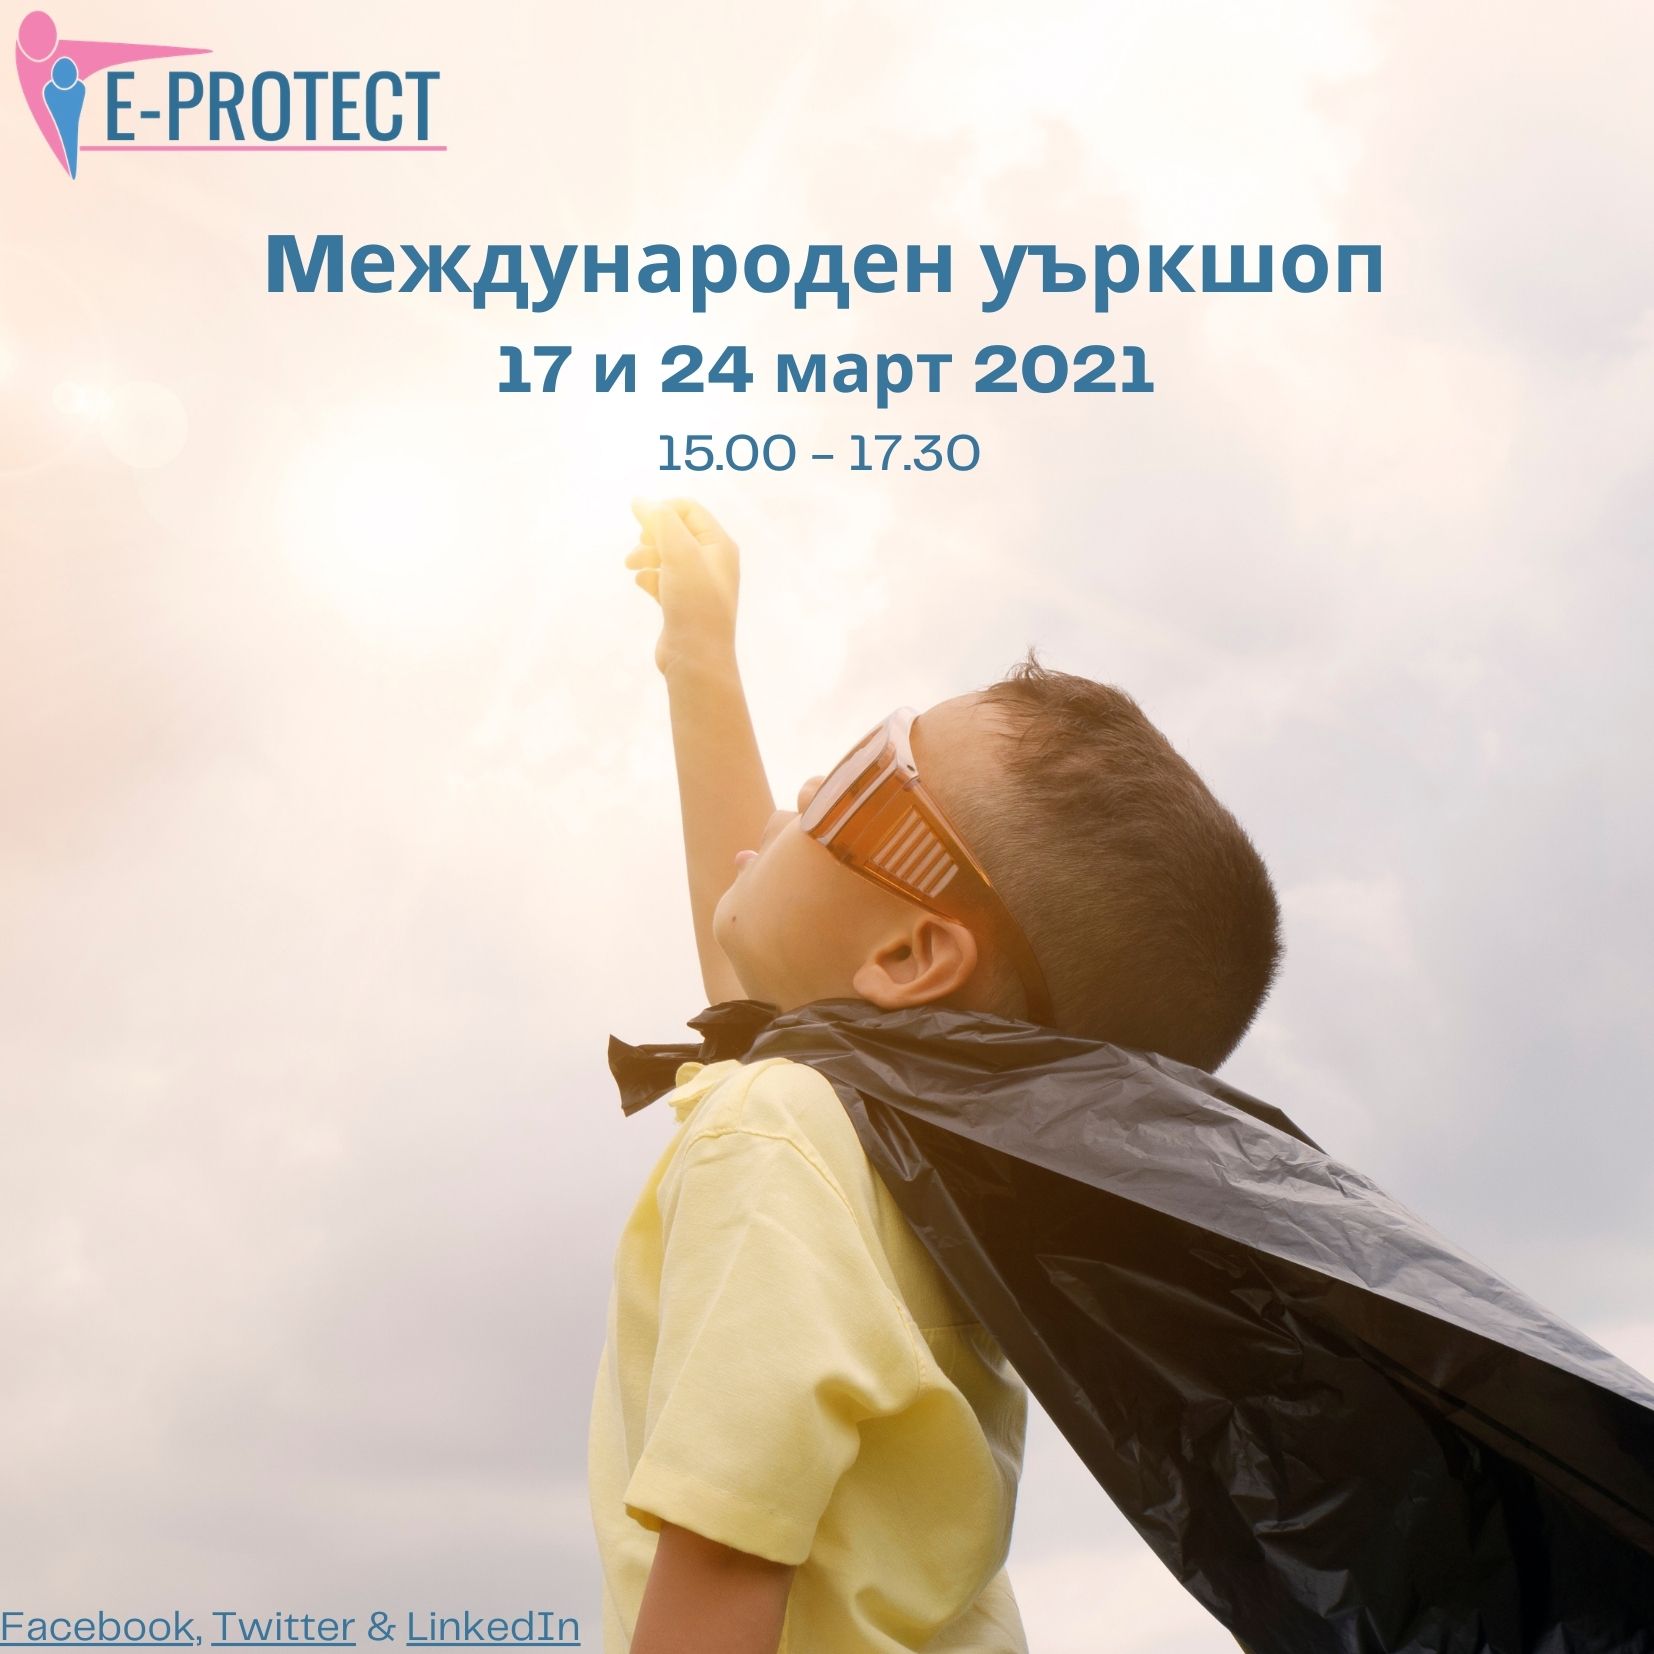 E-PROTECT II международен уъркшоп